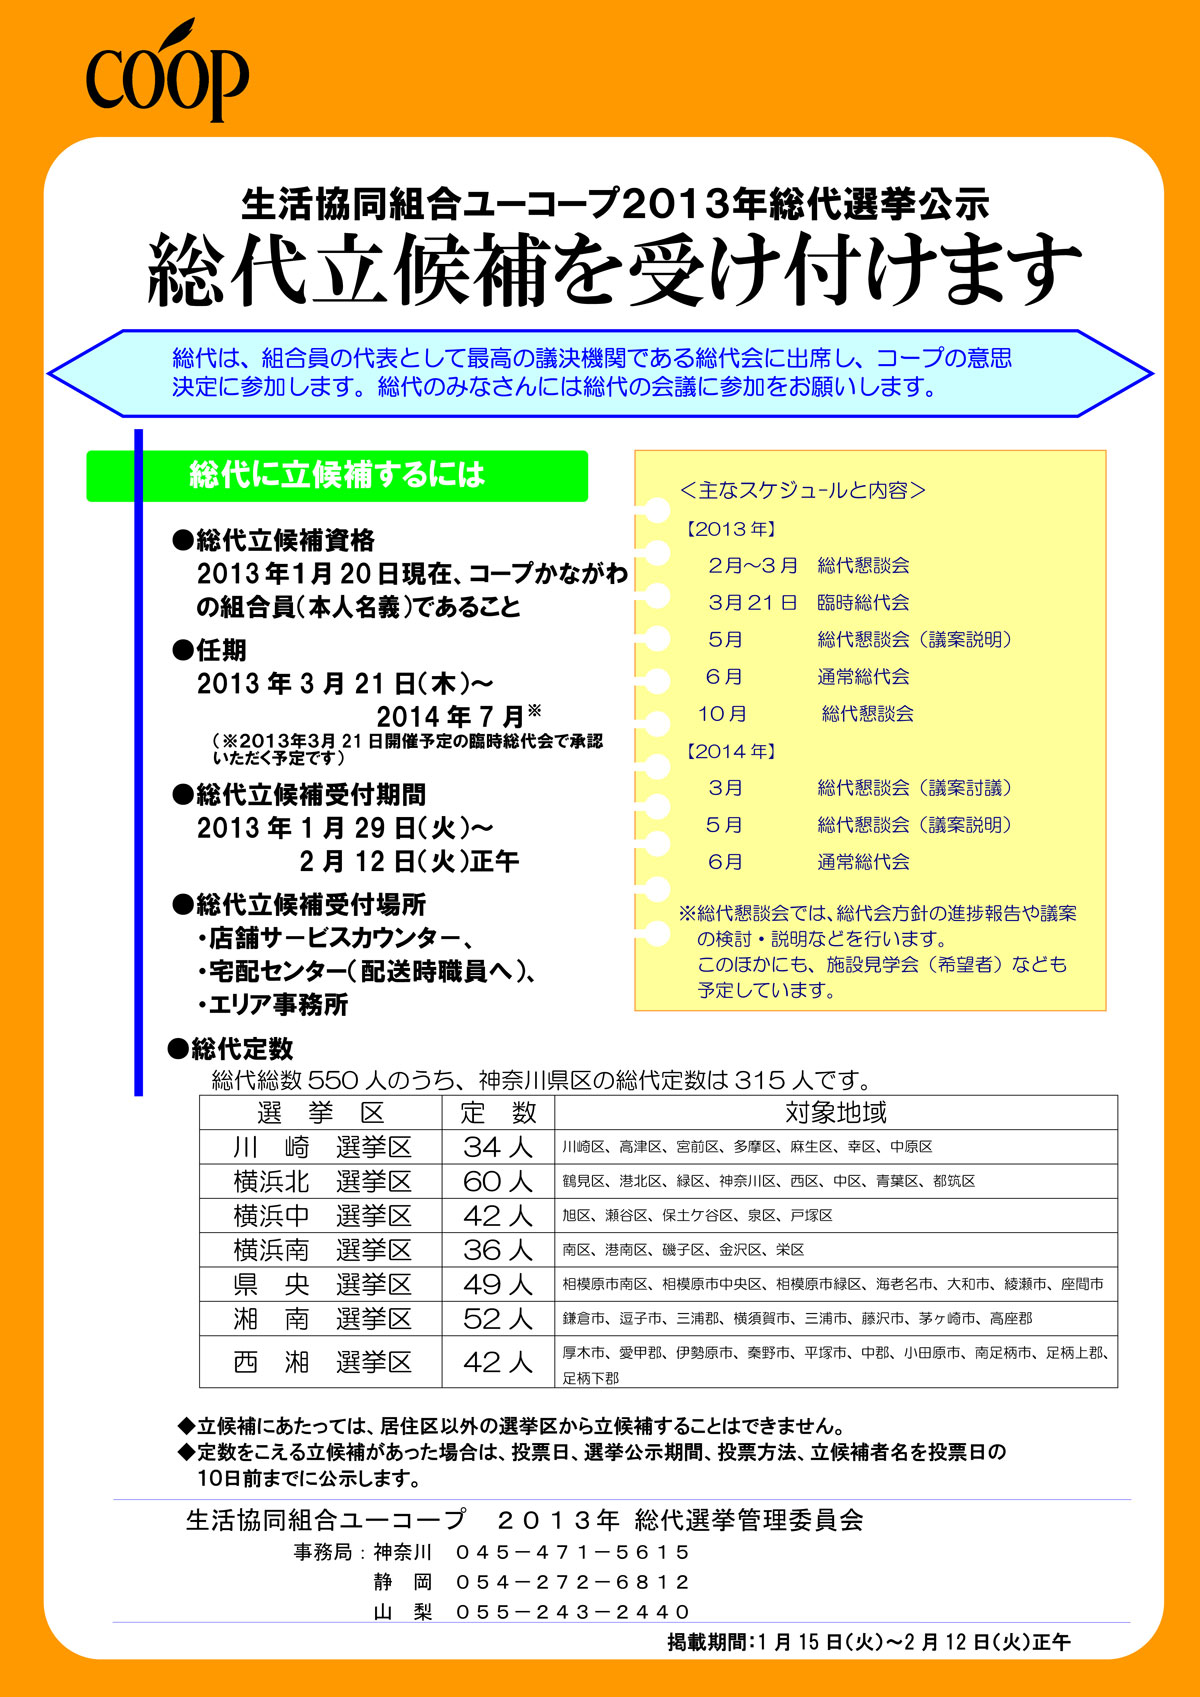 http://www.kanagawa-coop.or.jp/info/files/130111sodaikana.jpg